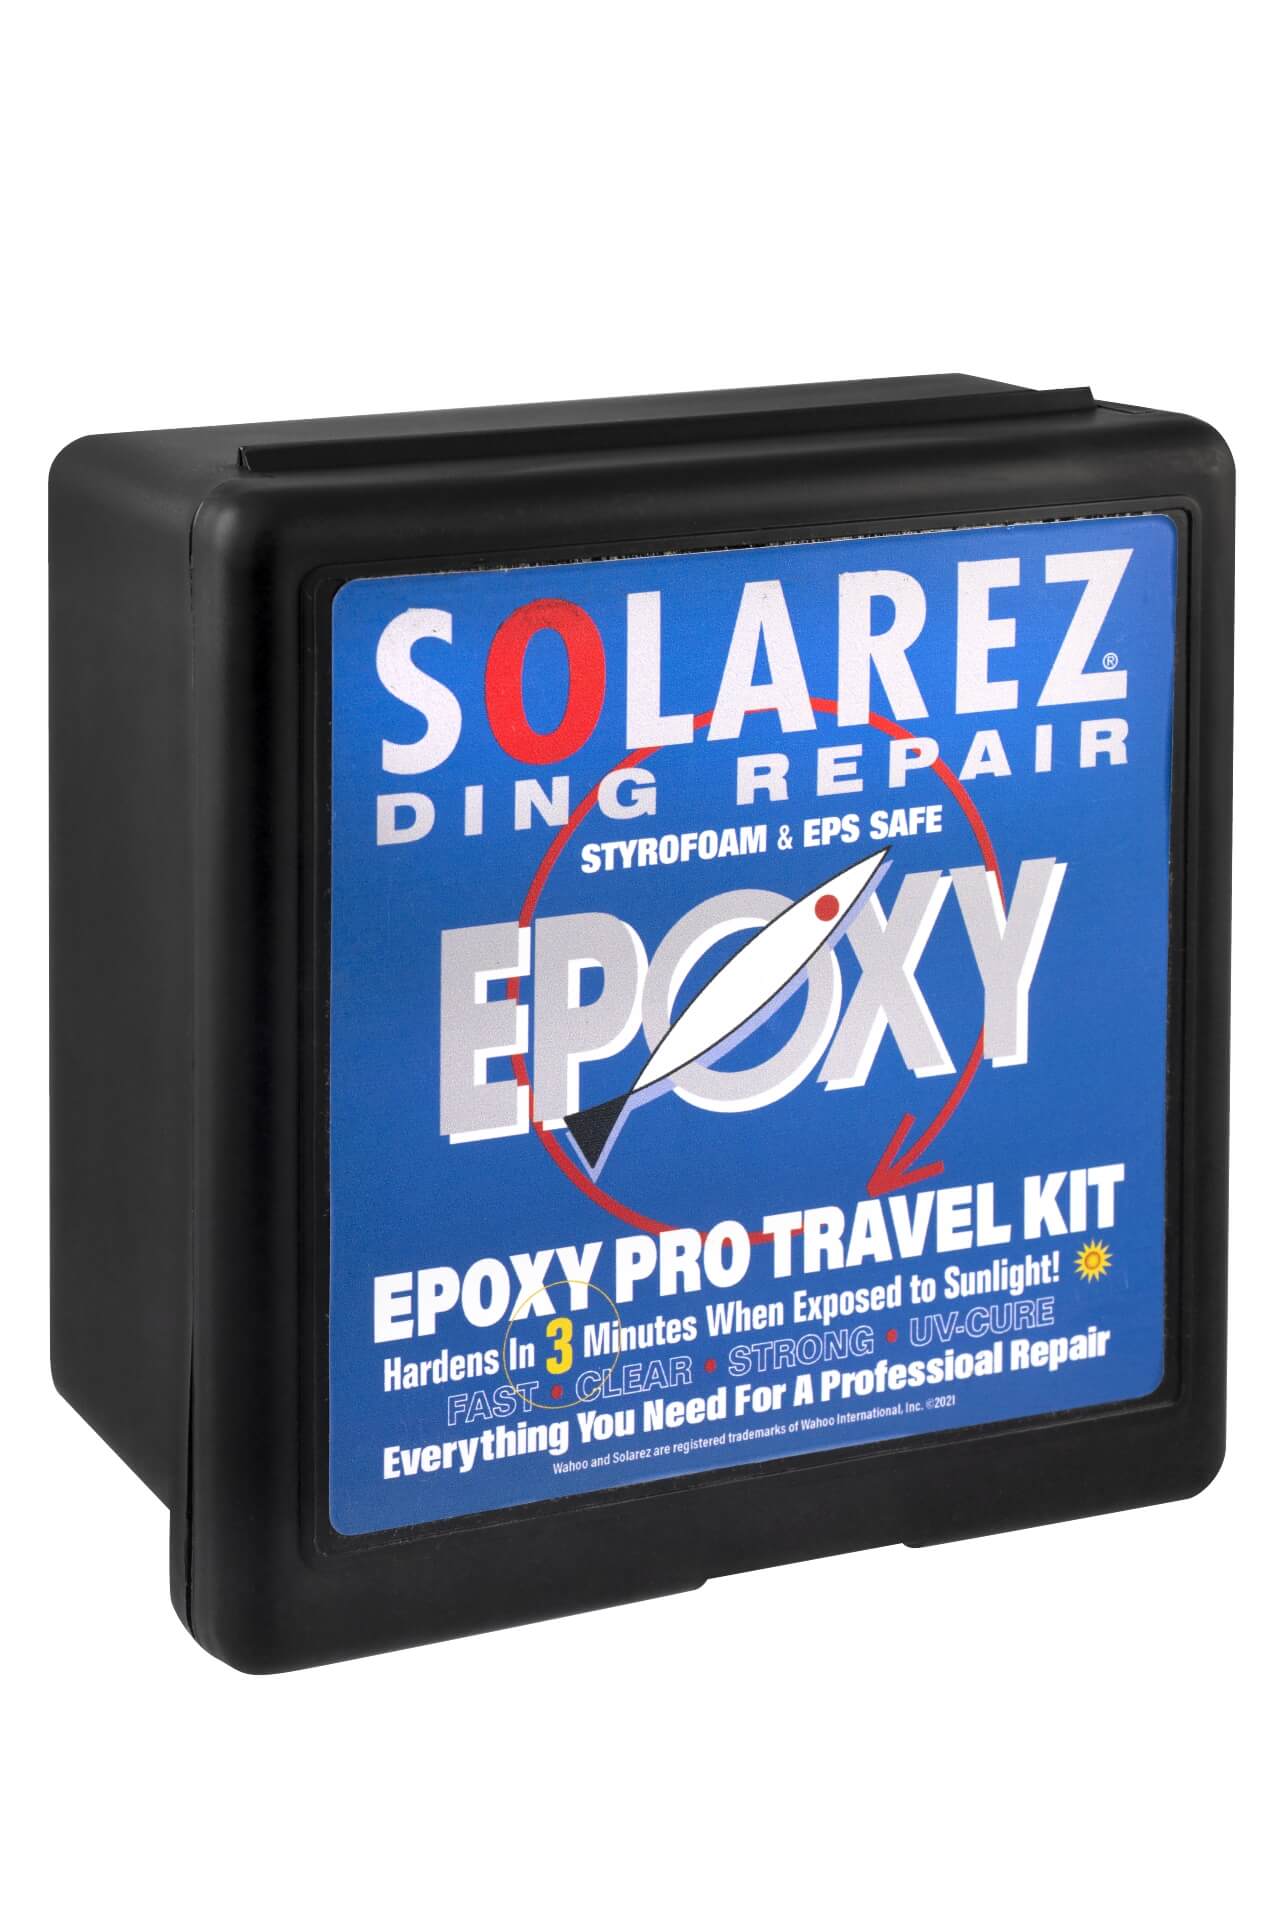 Solarez Ding Repair Epoxy Pro Travel Kit sku: